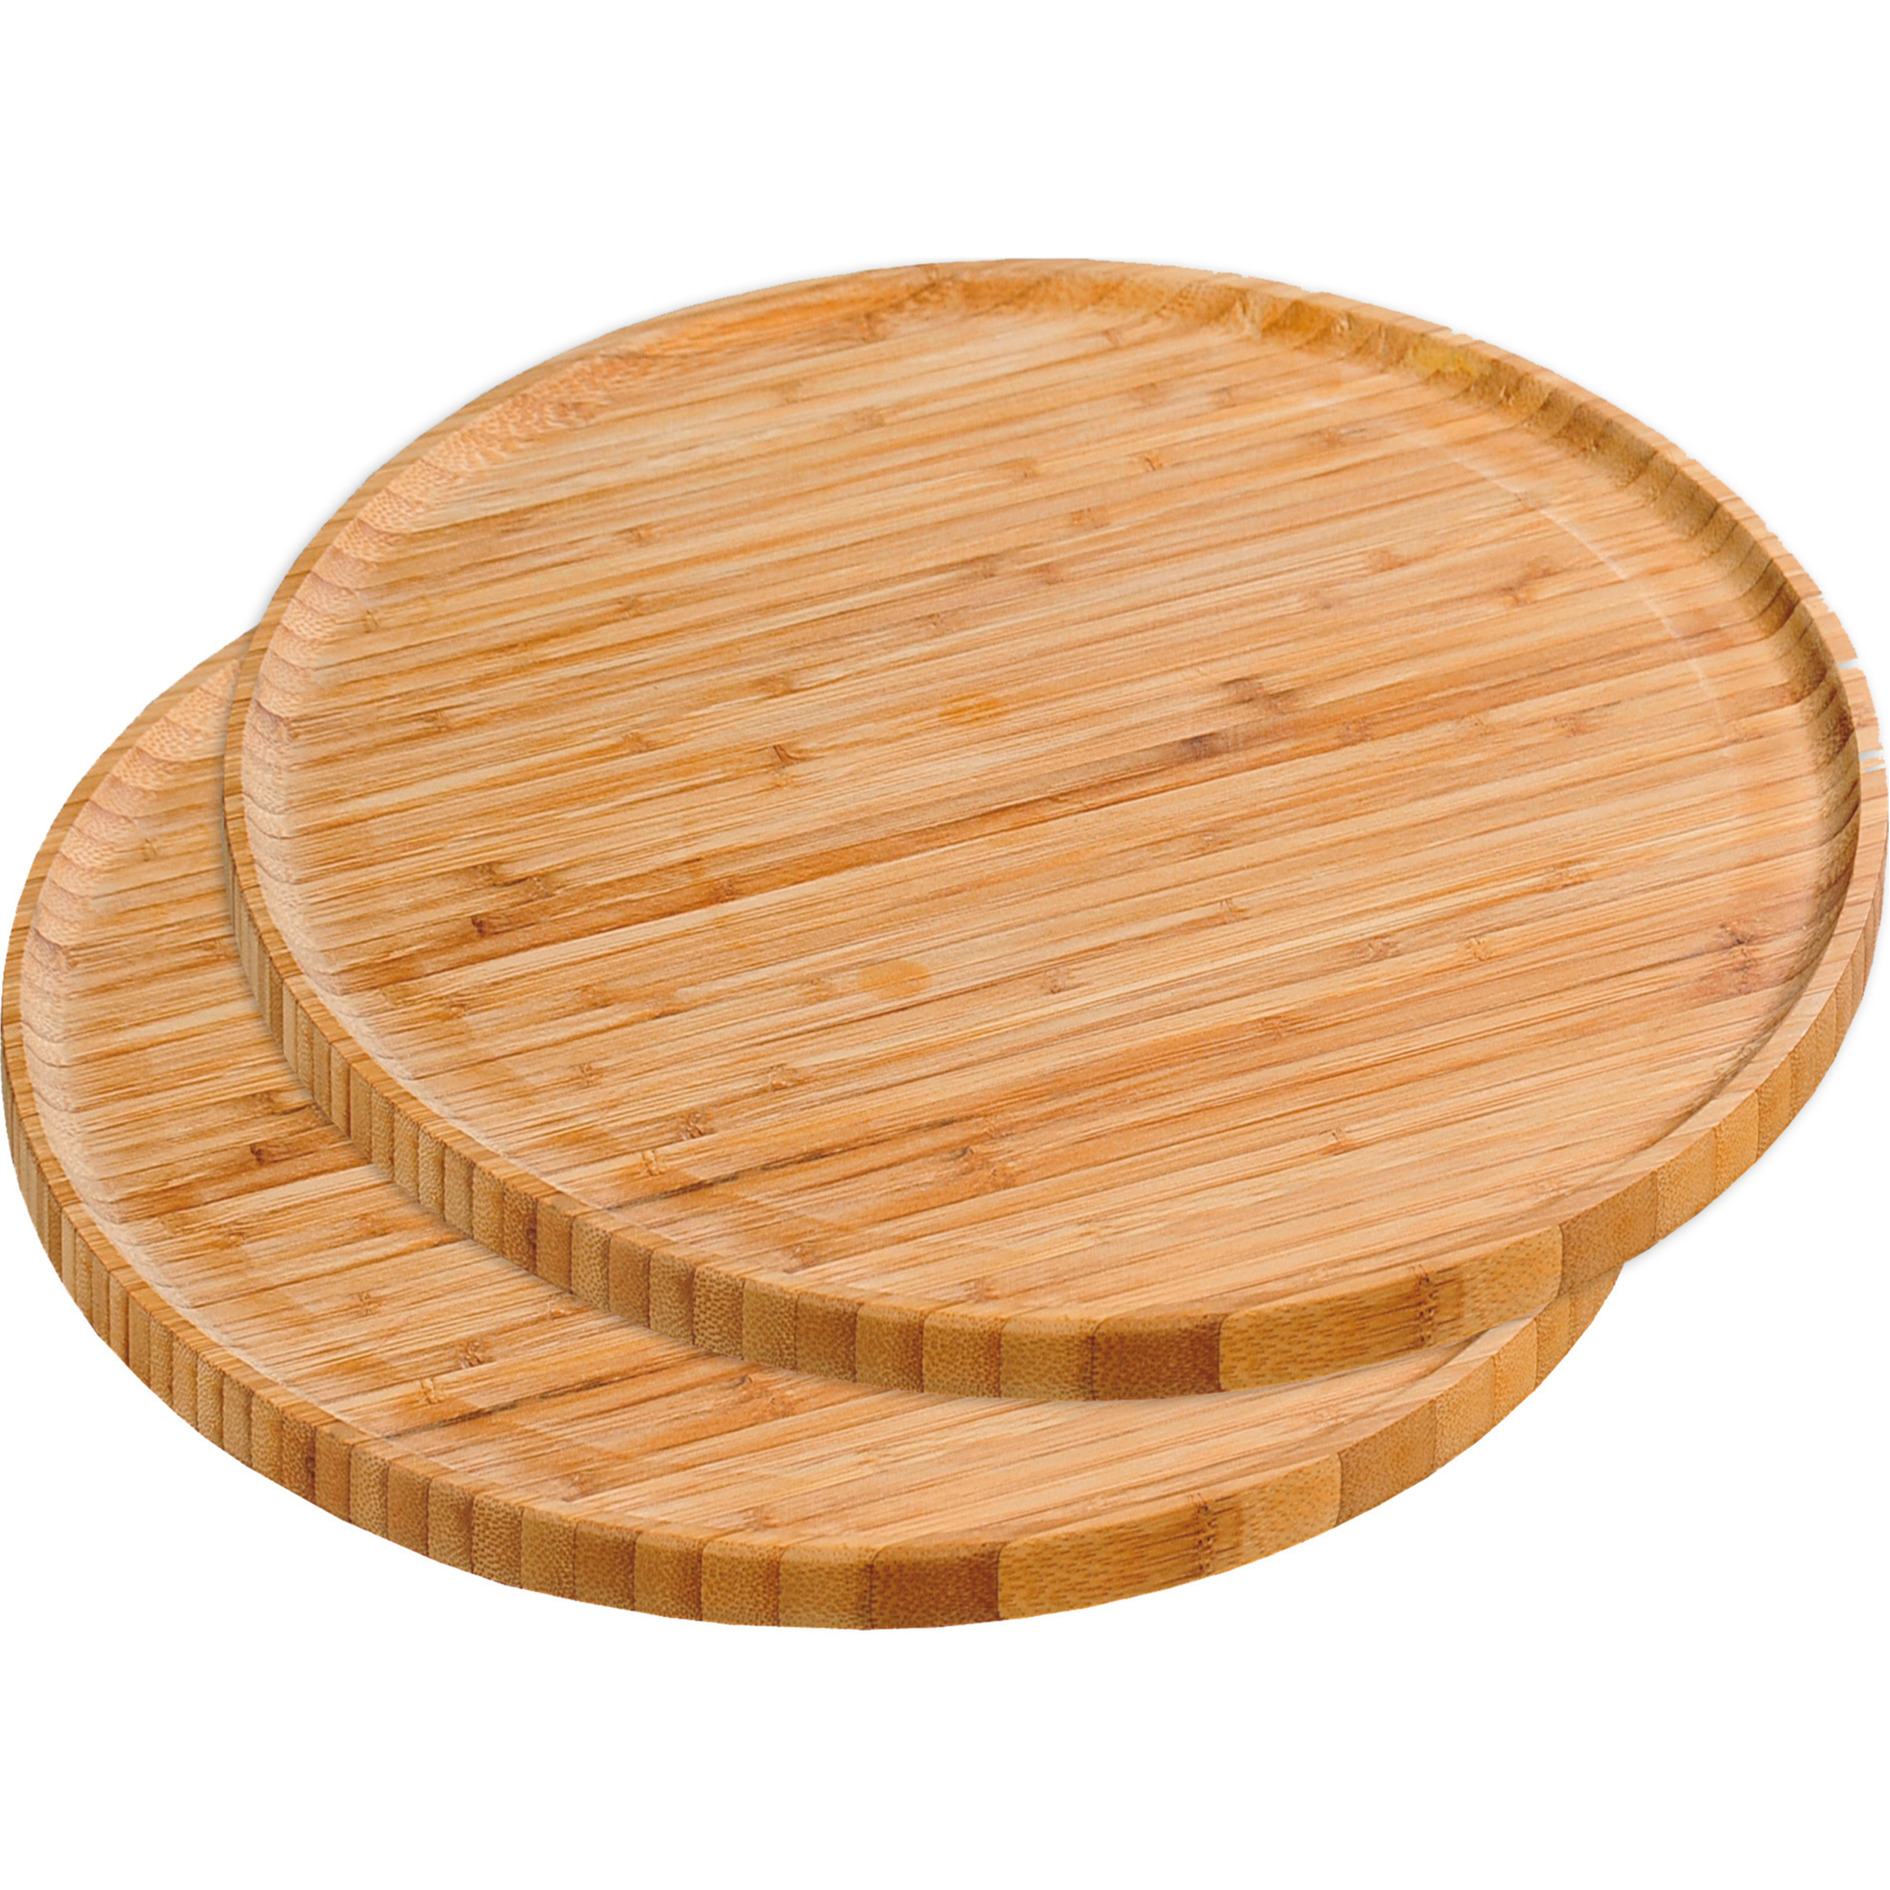 2x Ronde kaasplank-borrelplank van bamboe hout 32 cm